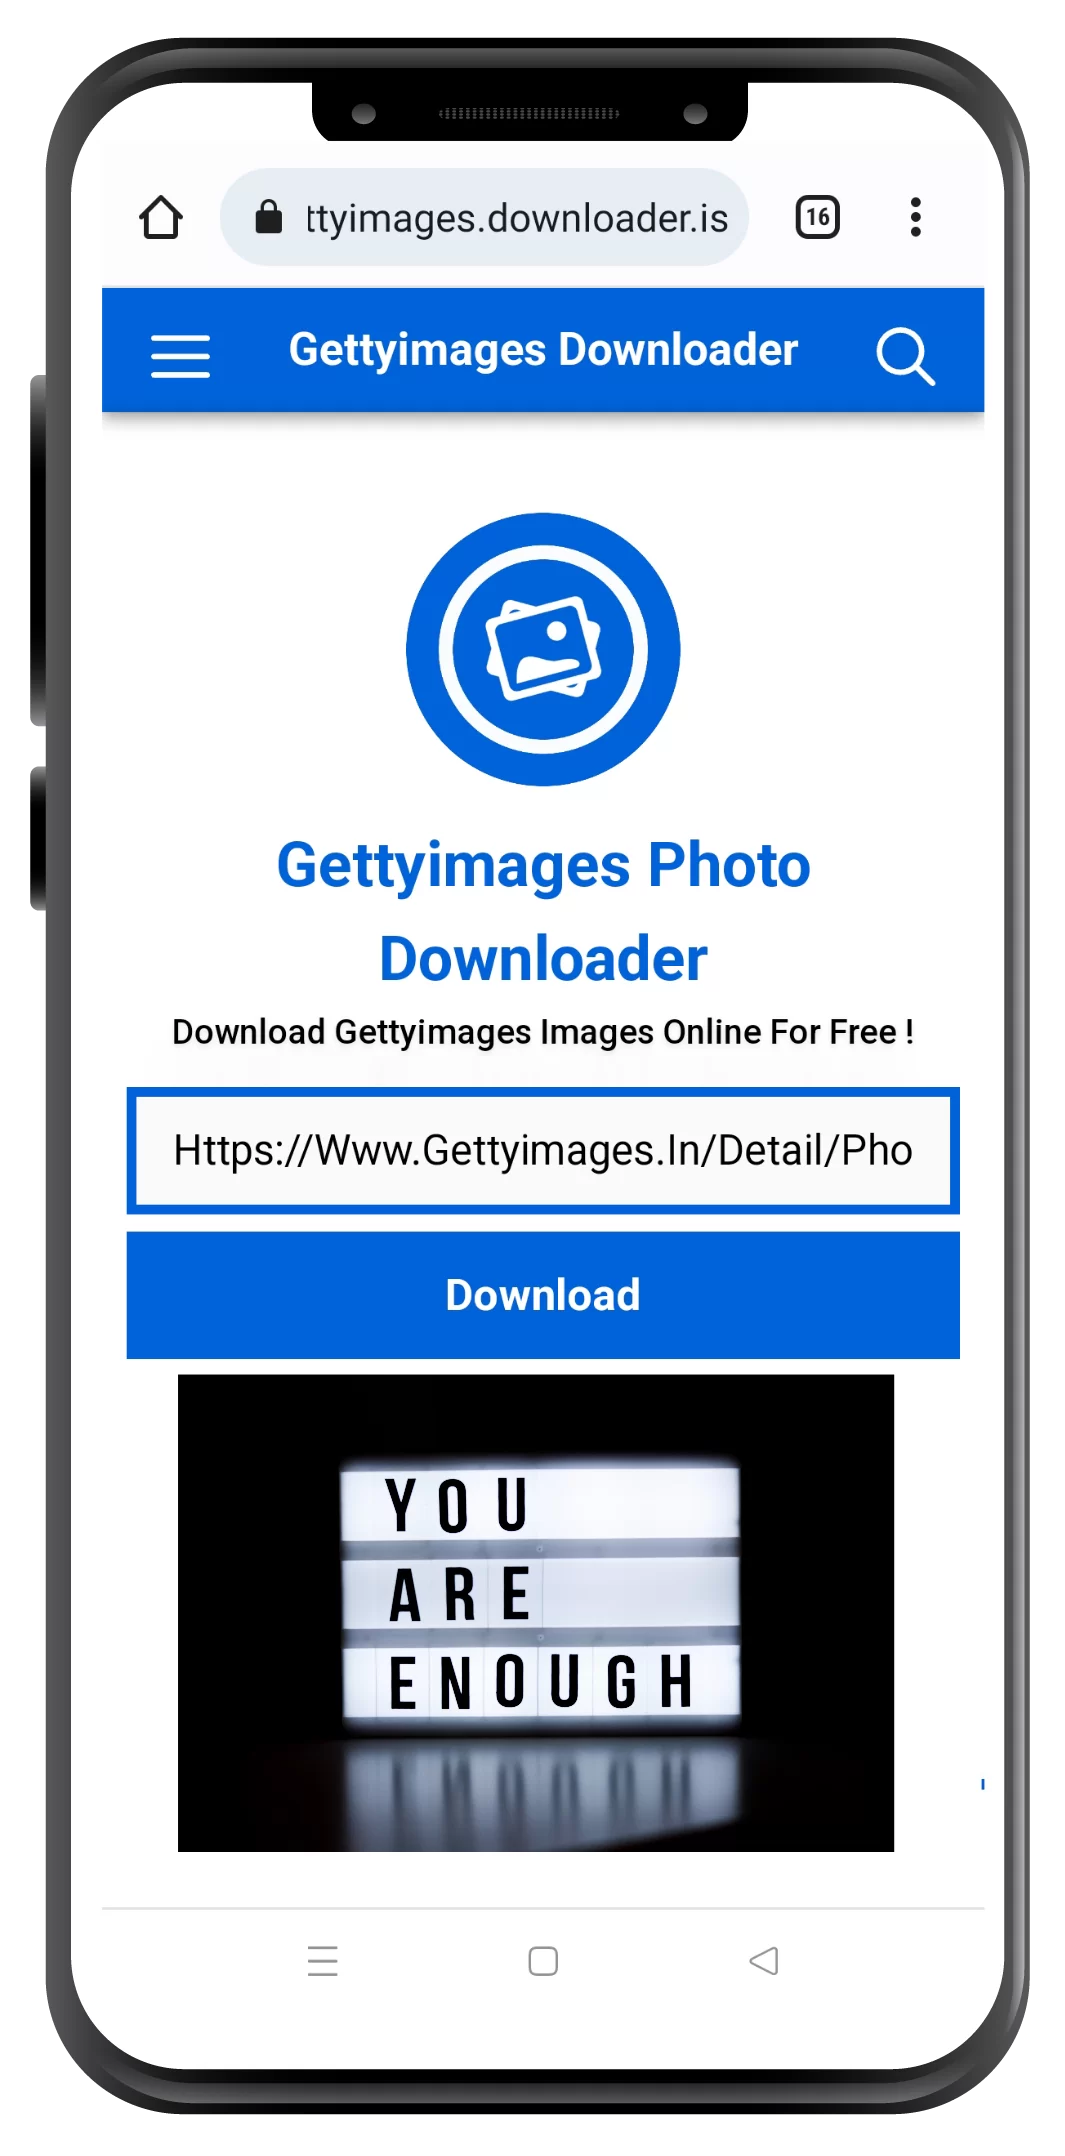 gettyimages downloader screenshot 3.png